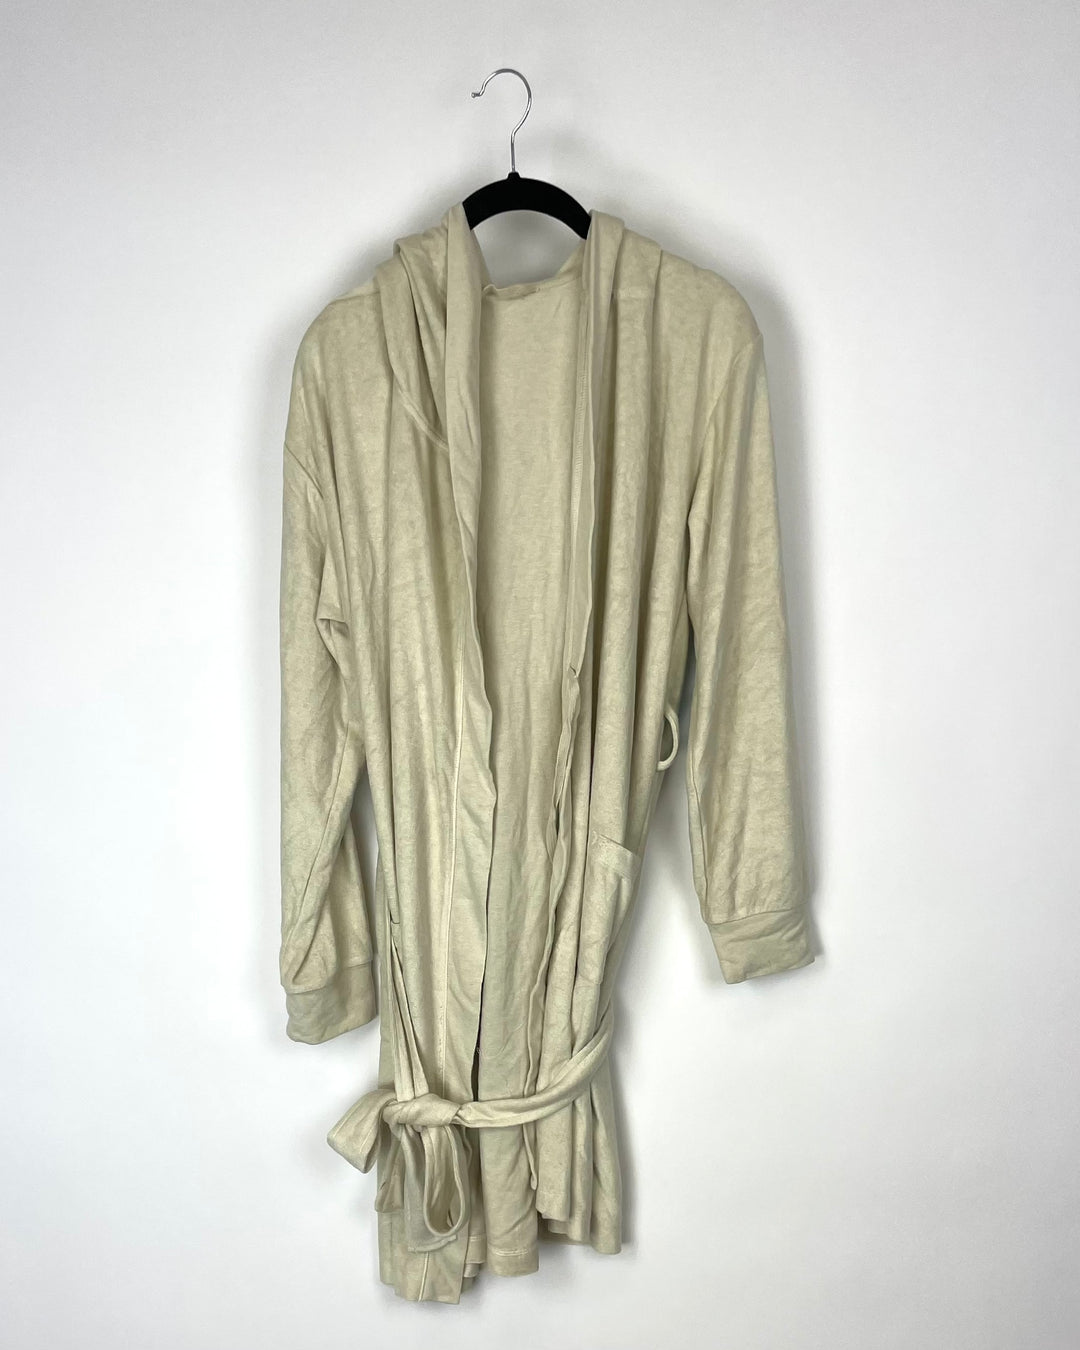 Beige Long Sleeve Robe - Small, 1X